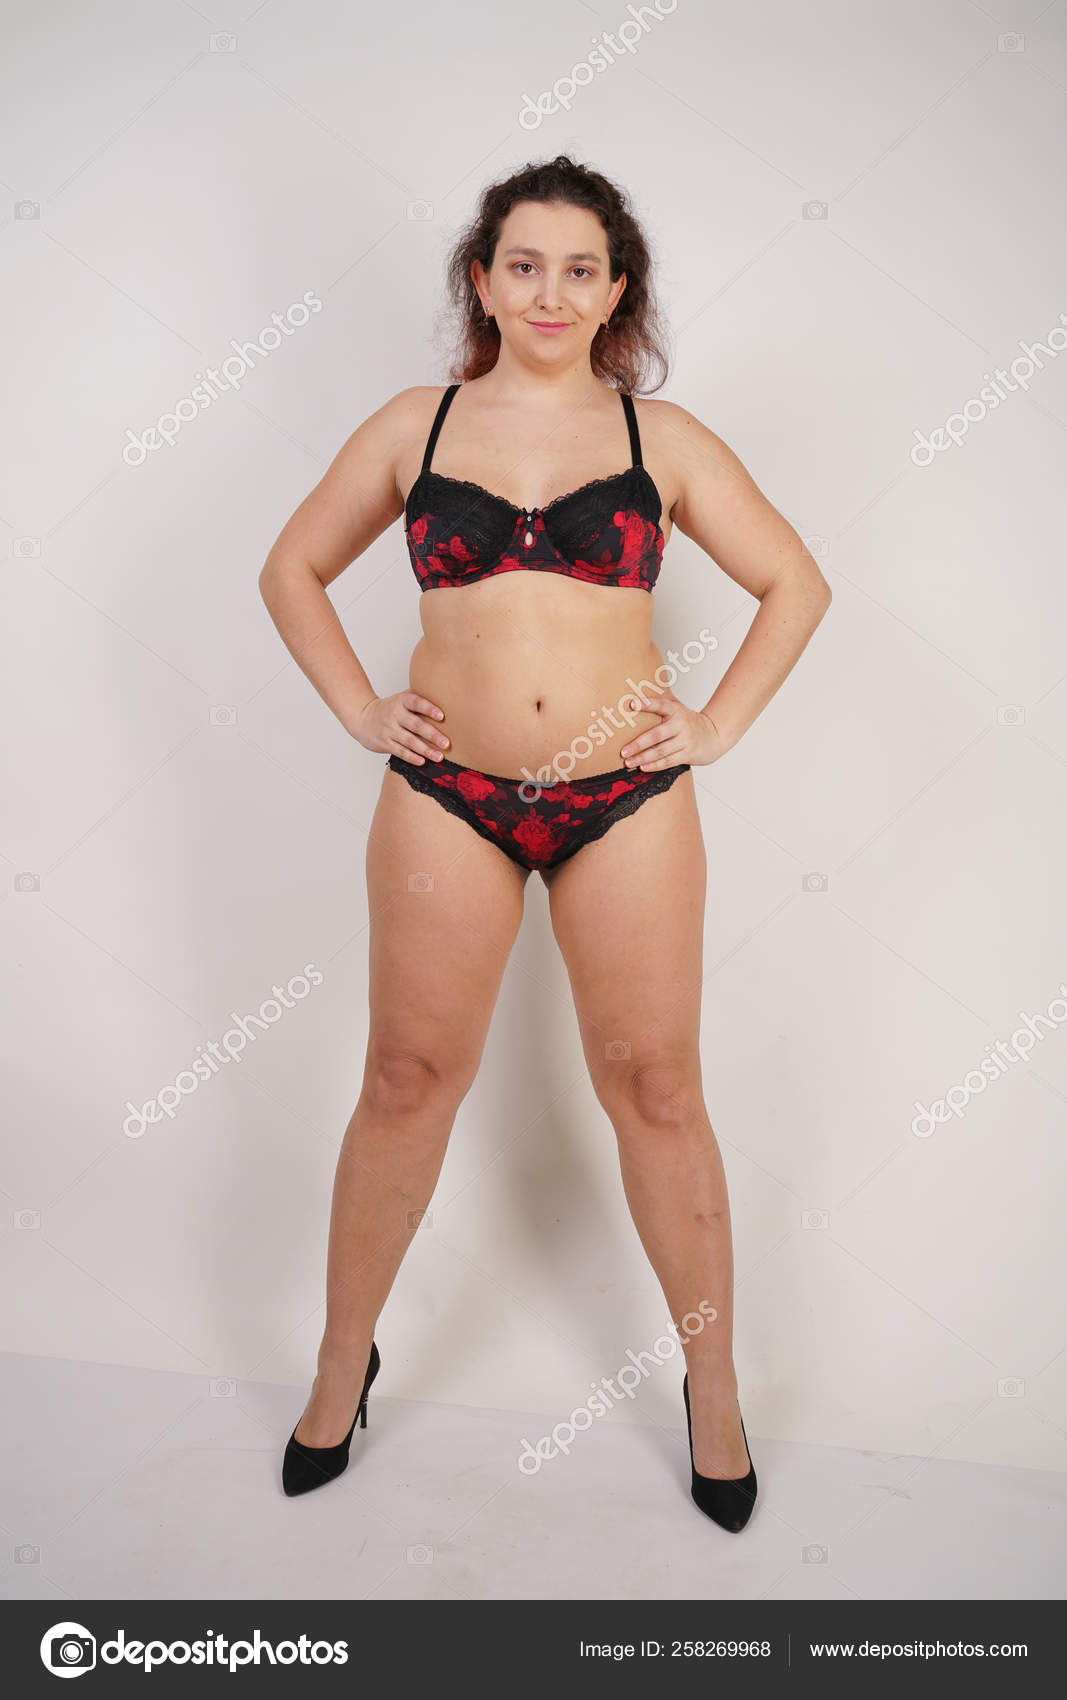 Feminine Chubby Woman Size Body Black Lingerie Posing White